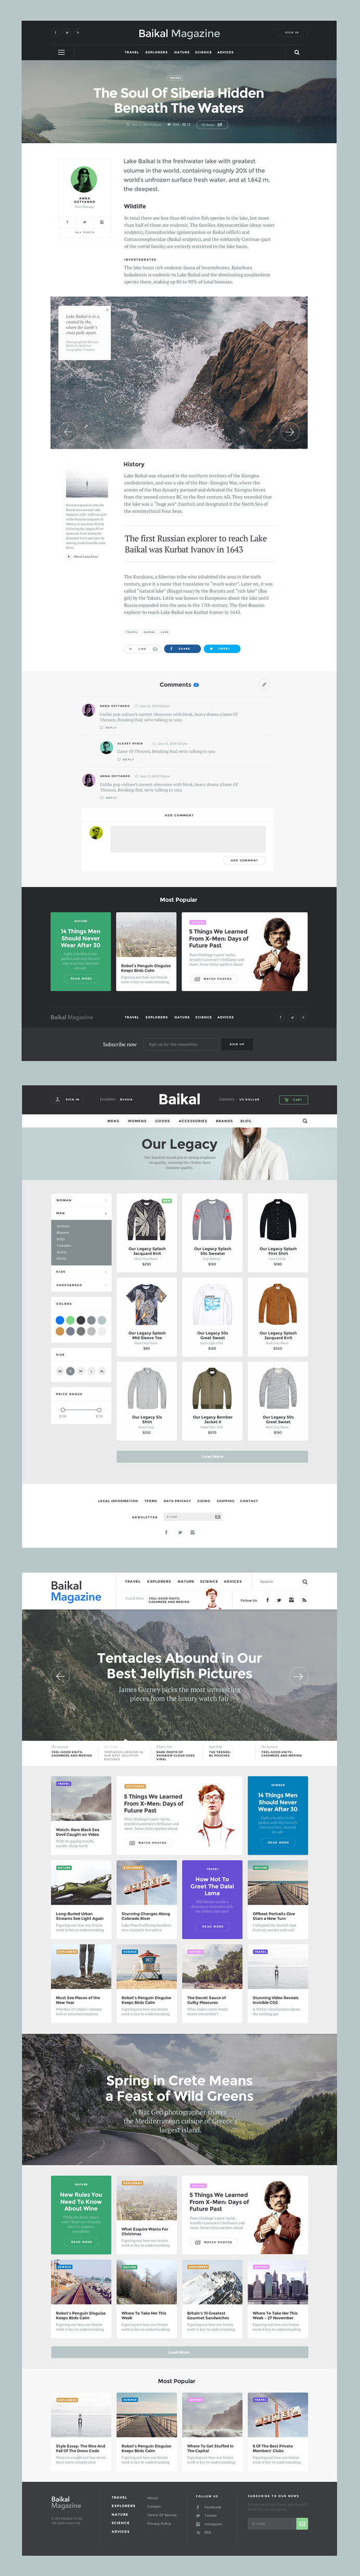 Baikal_preview_samples #design #ui #website #kit #web